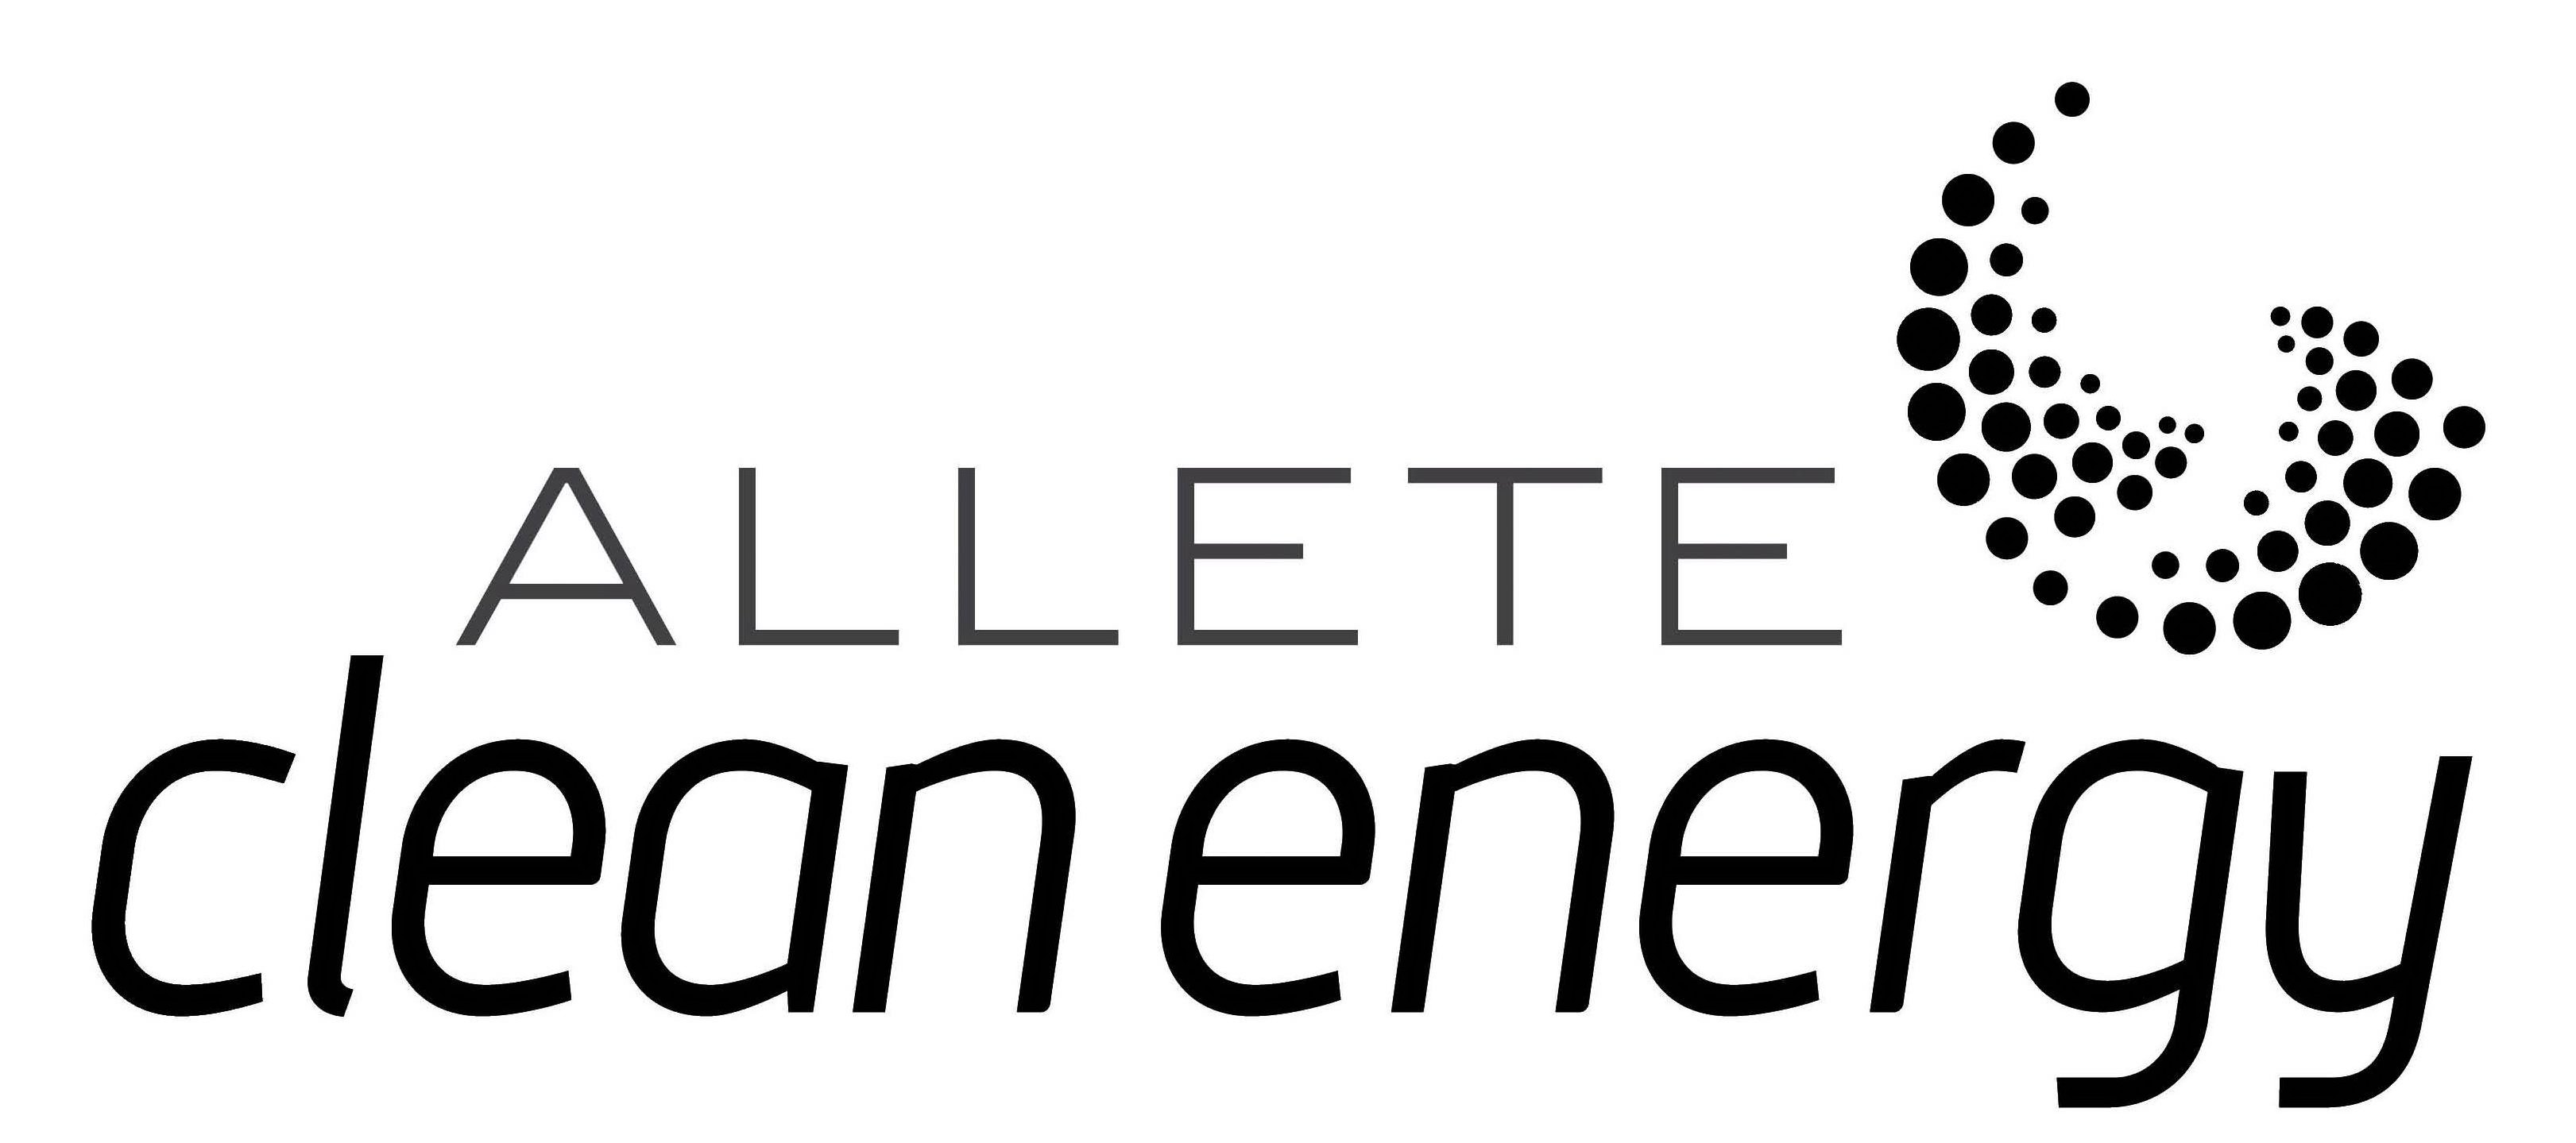 ALLETE CLEAN ENERGY - Allete, Inc. Trademark Registration